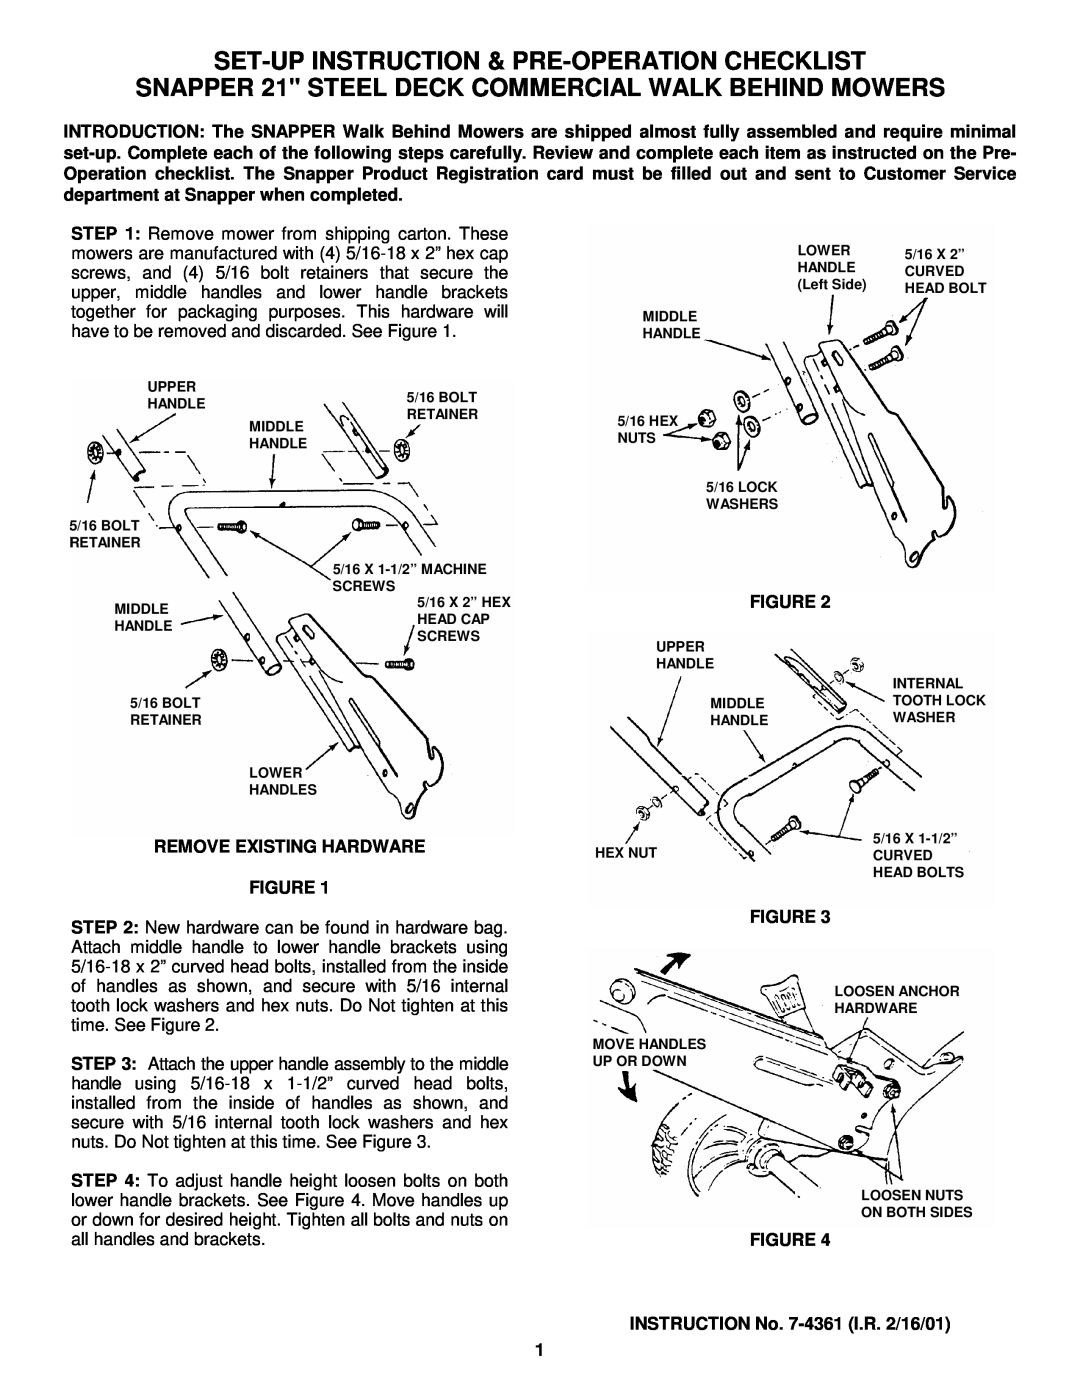 Snapper Steel Deck Commercial Walk Behind Mowers manual Set-Upinstruction & Pre-Operationchecklist 